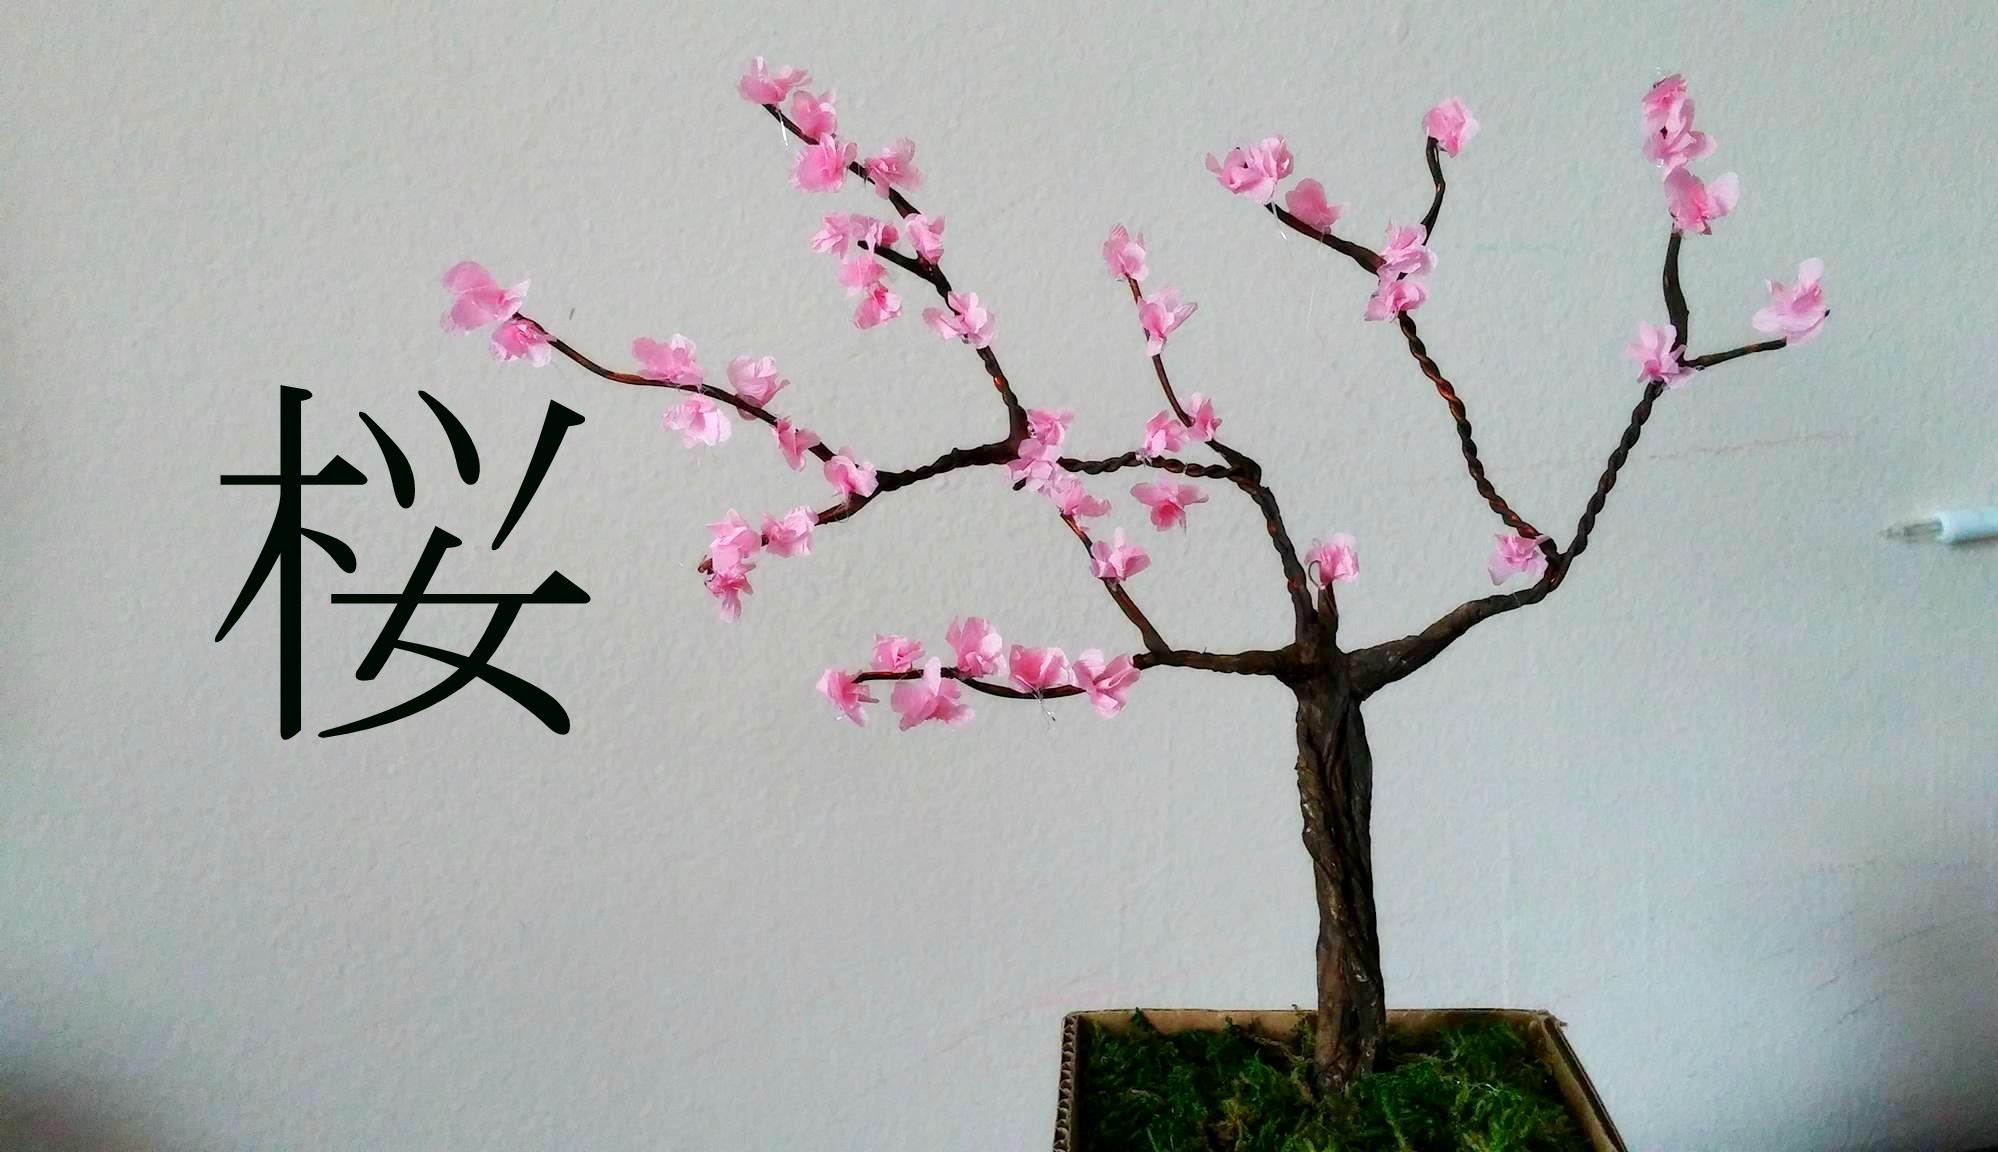 DIY Cherry Blossom Tree // Room Decor - YouTube